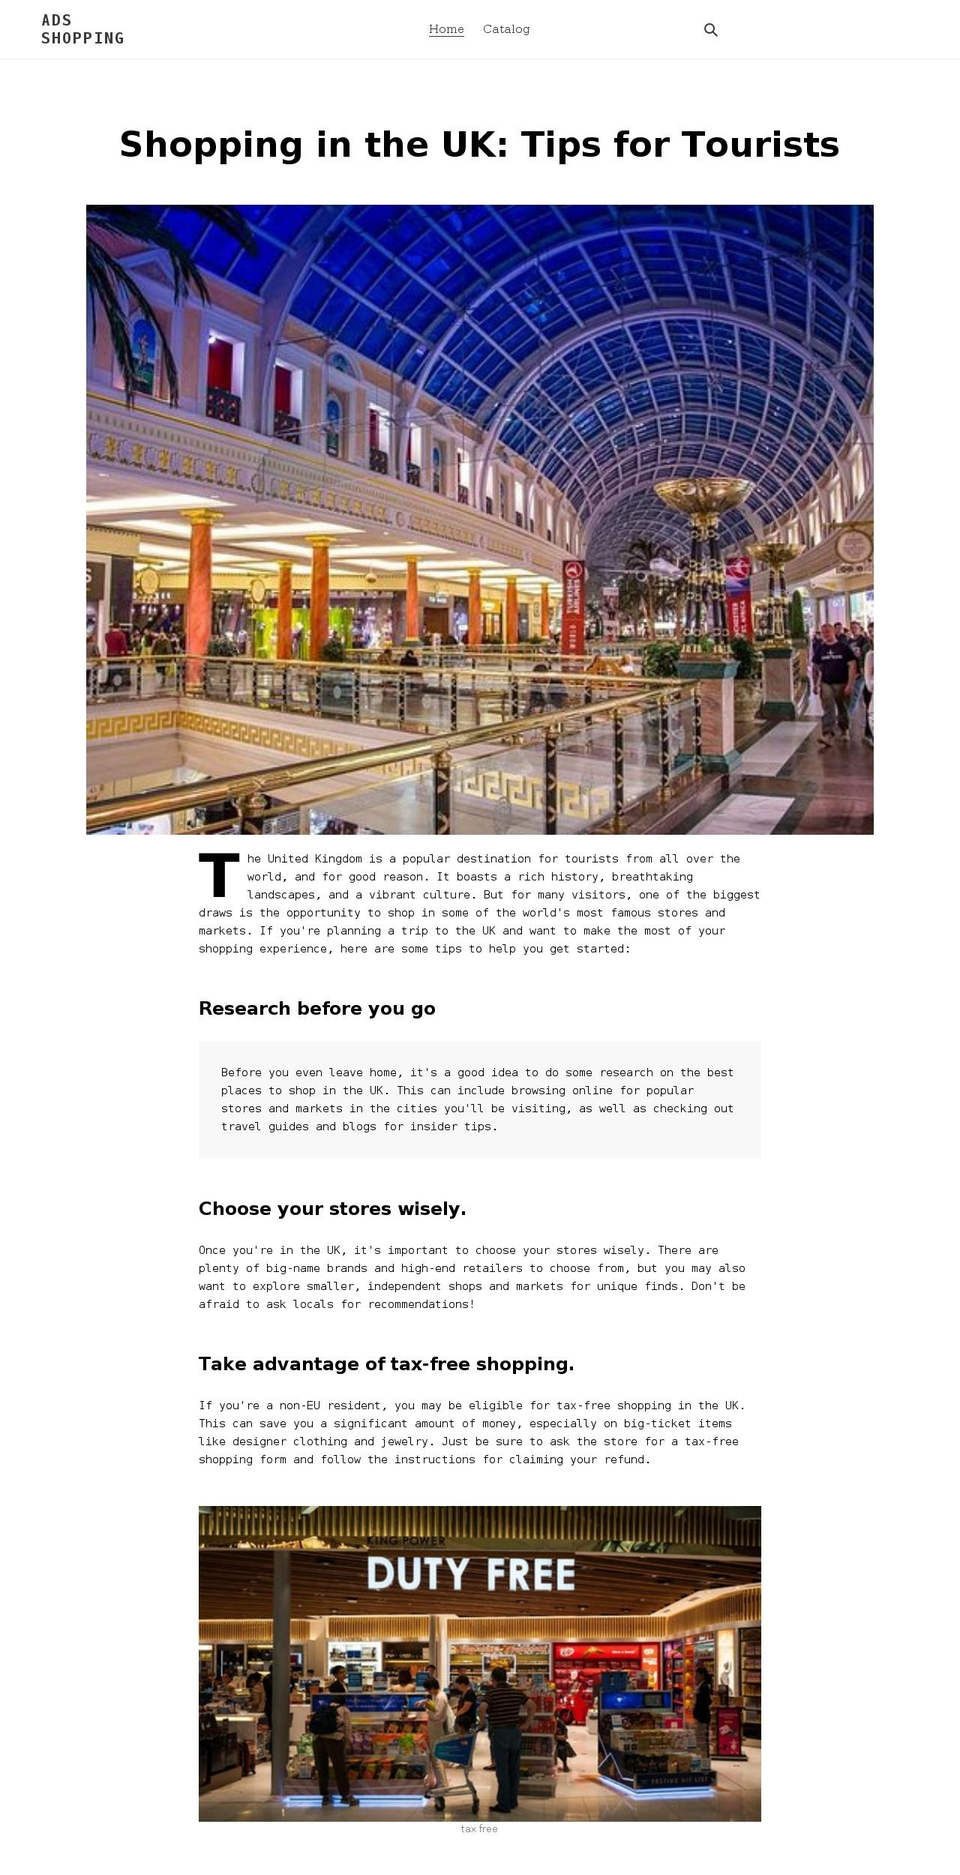 ads.shopping shopify website screenshot